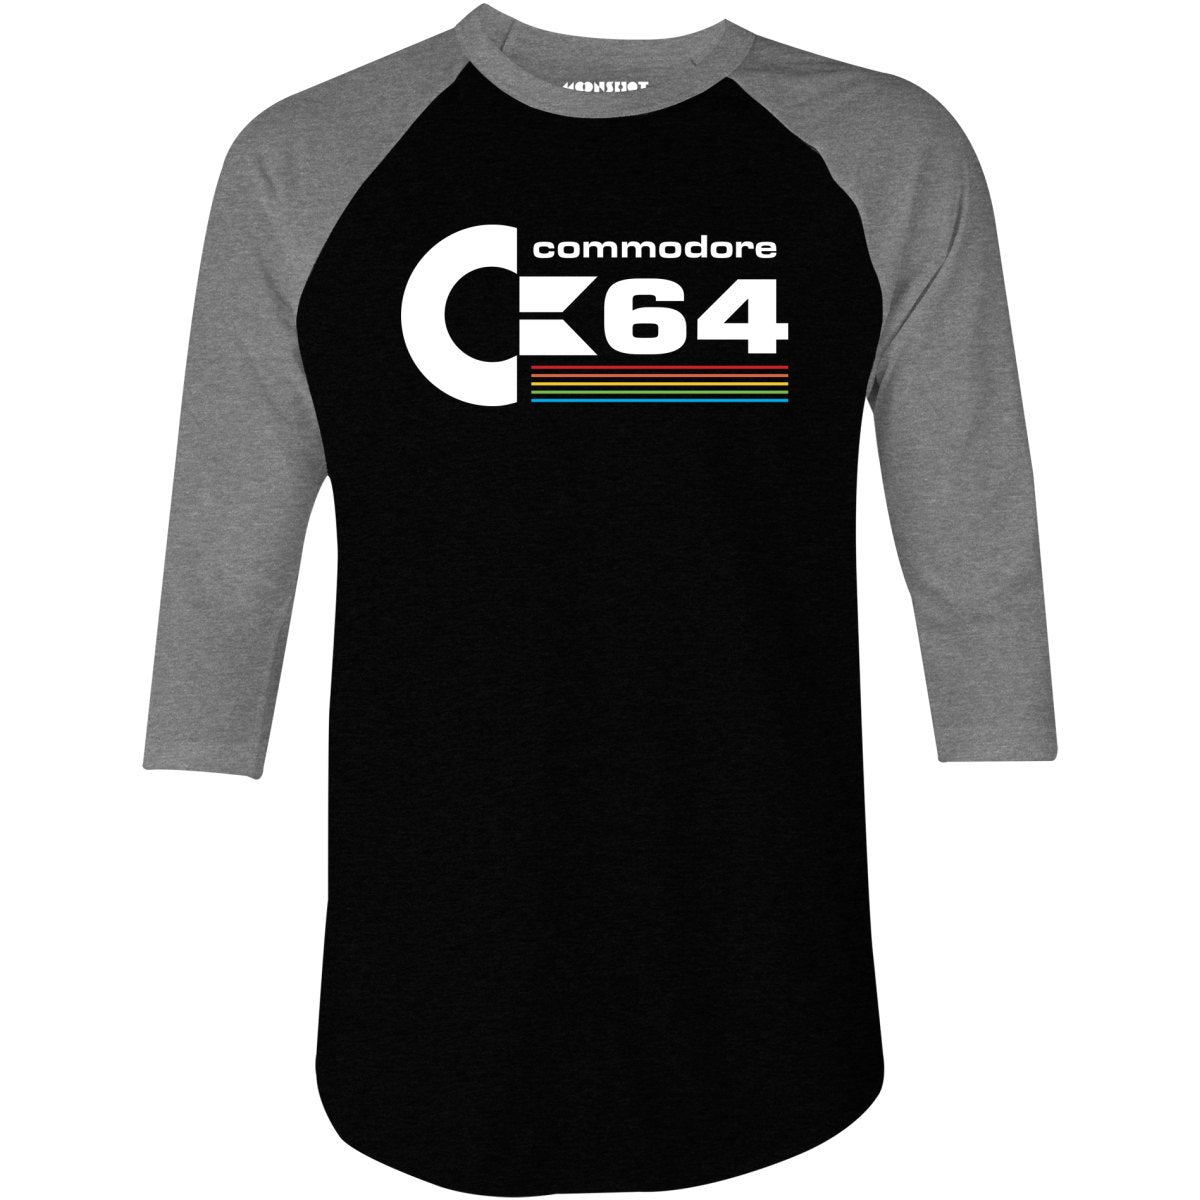 Commodore 64 - 3/4 Sleeve Raglan T-Shirt